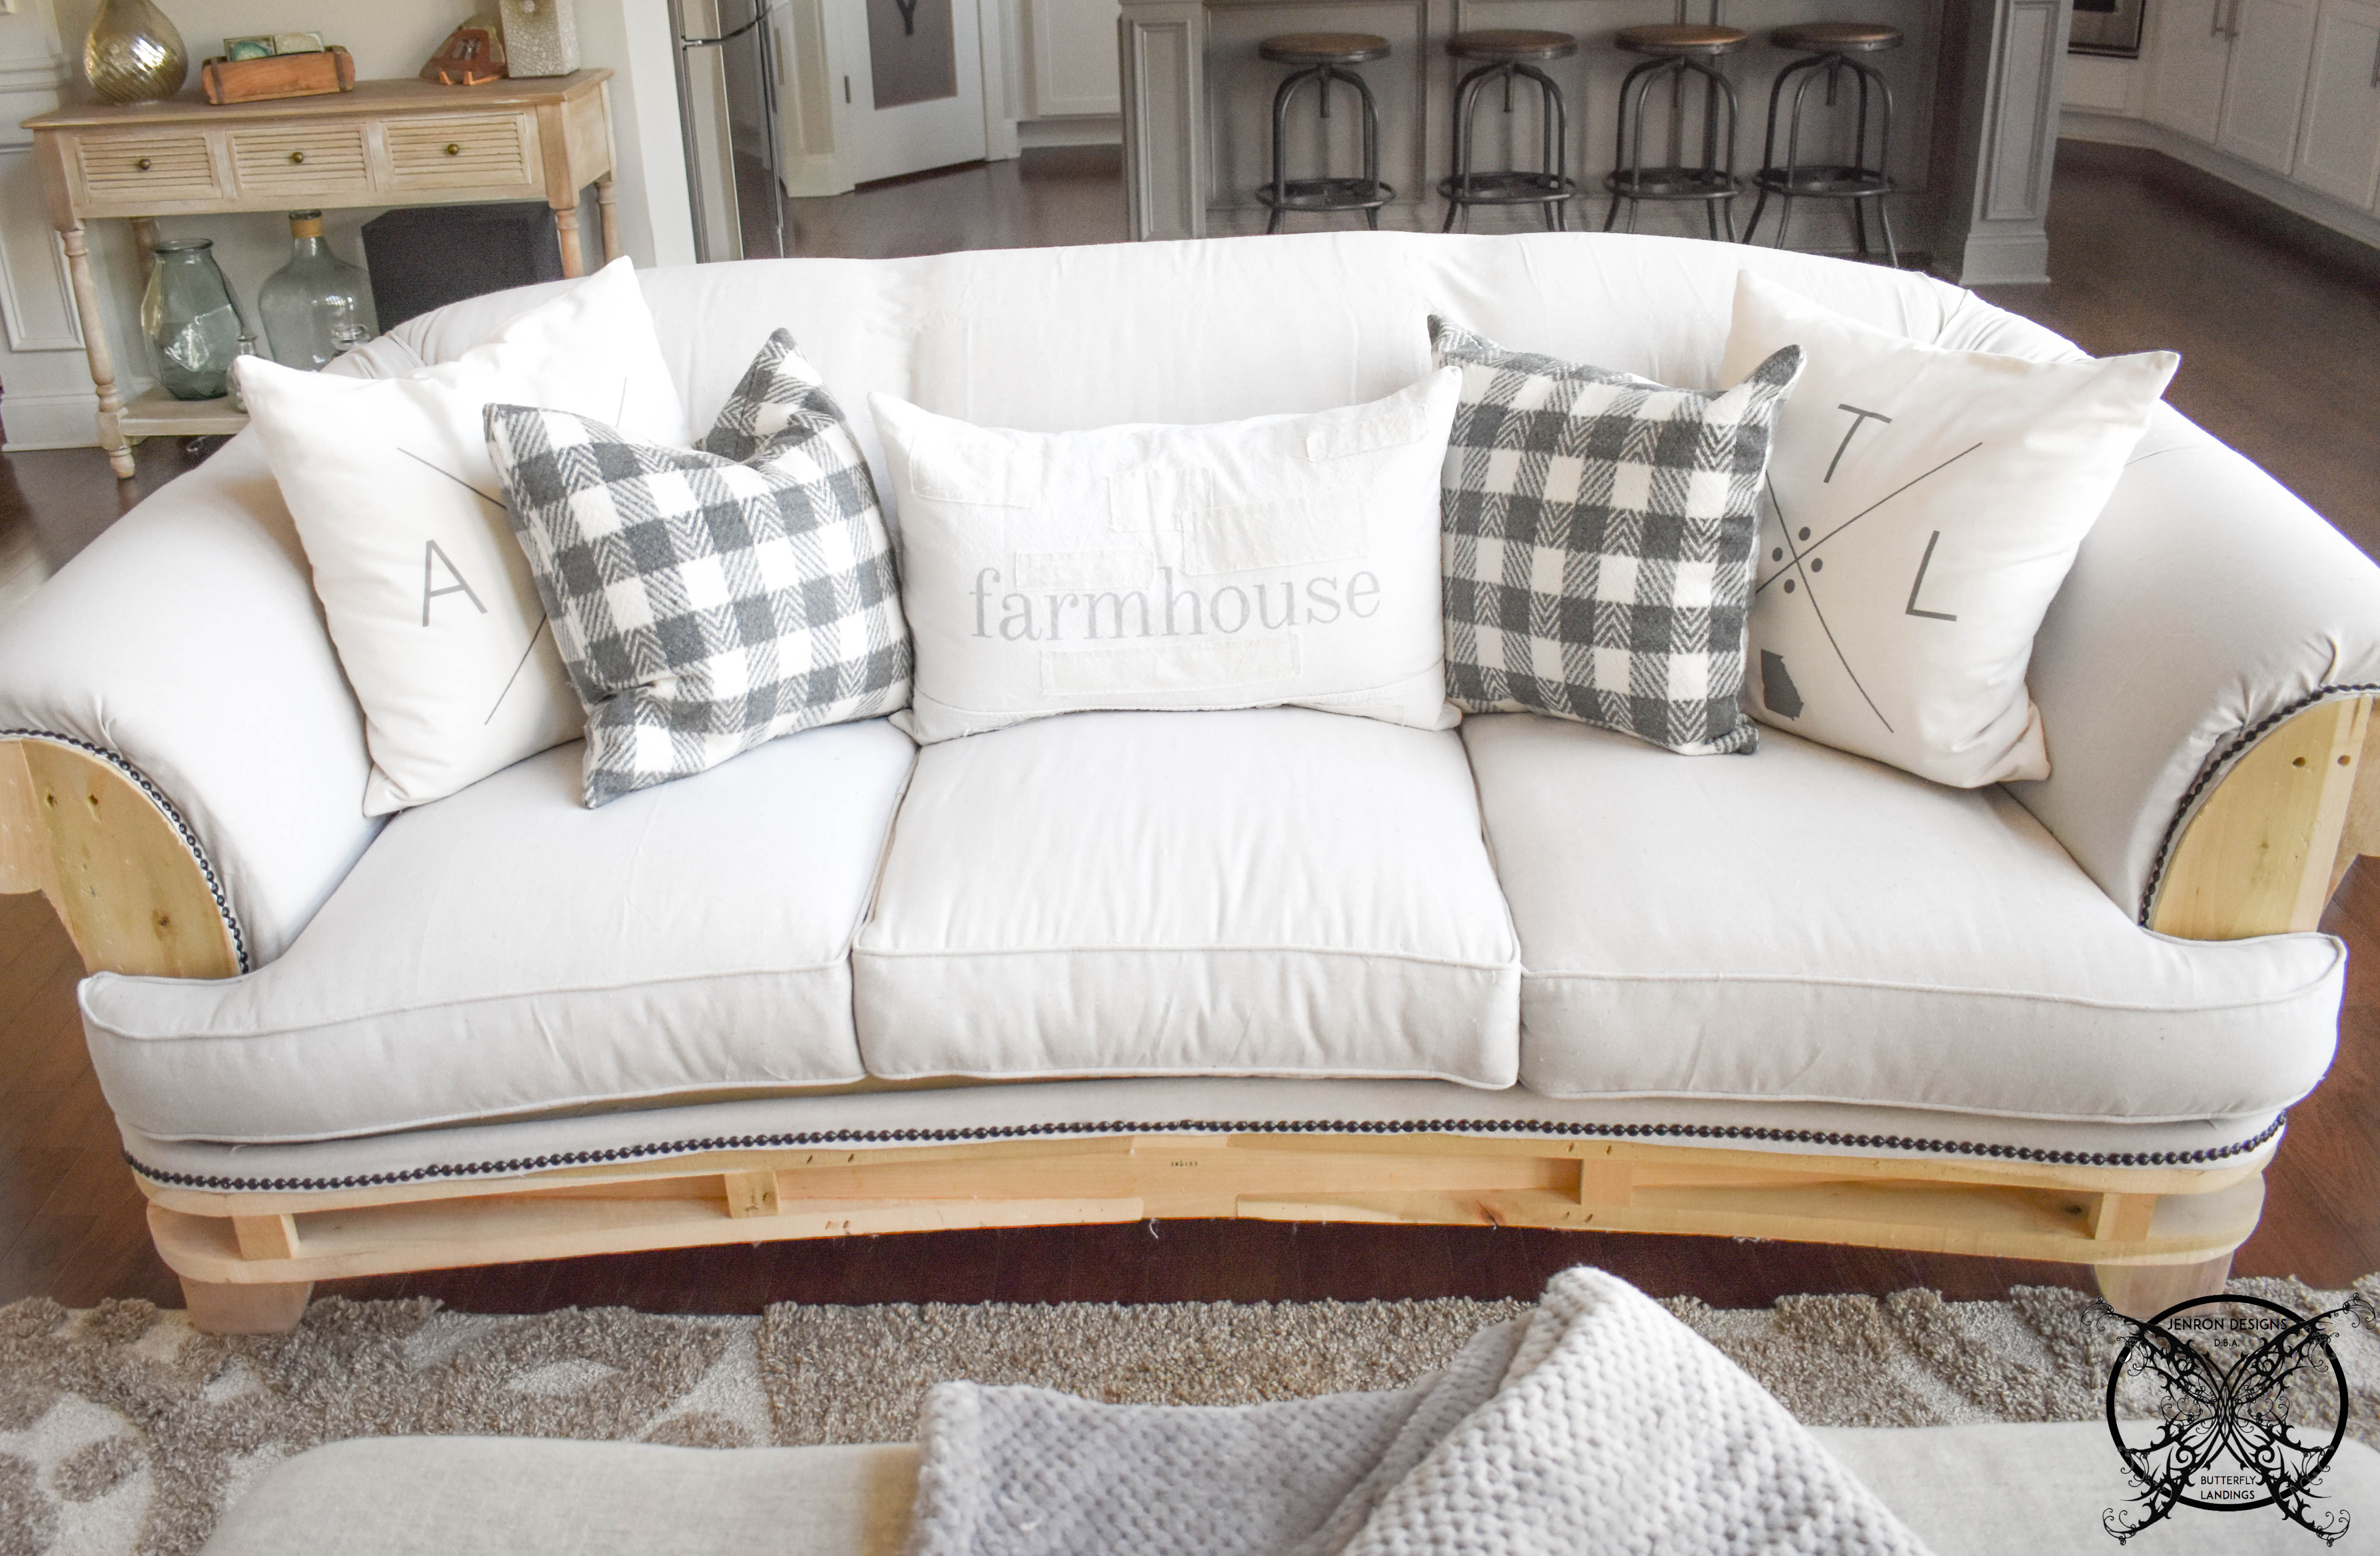 Stunning DIY Decorative Leather Throw Pillows - Houseful of Handmade